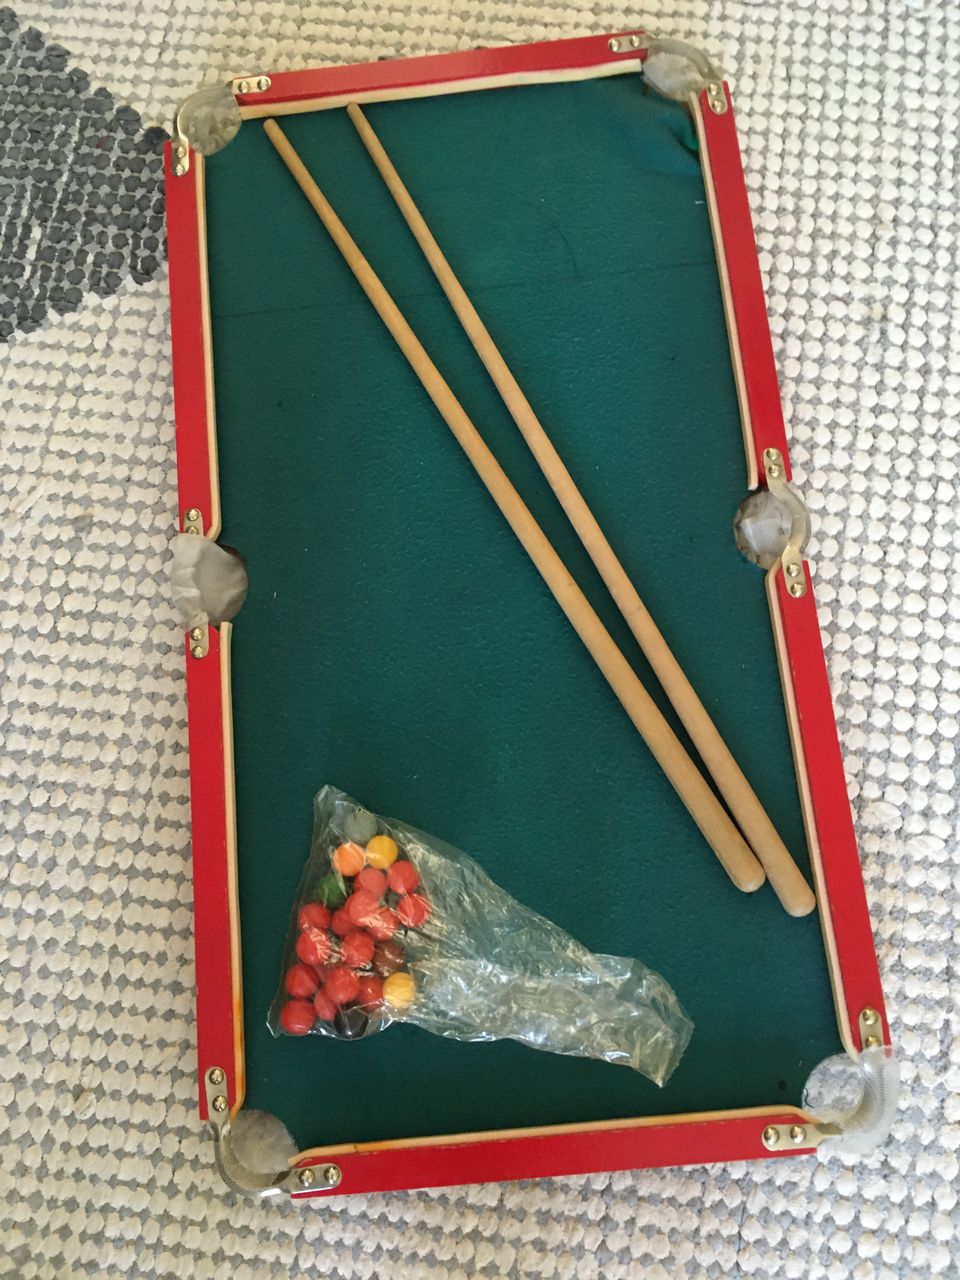 Lasten ’vintage’ billiard table game